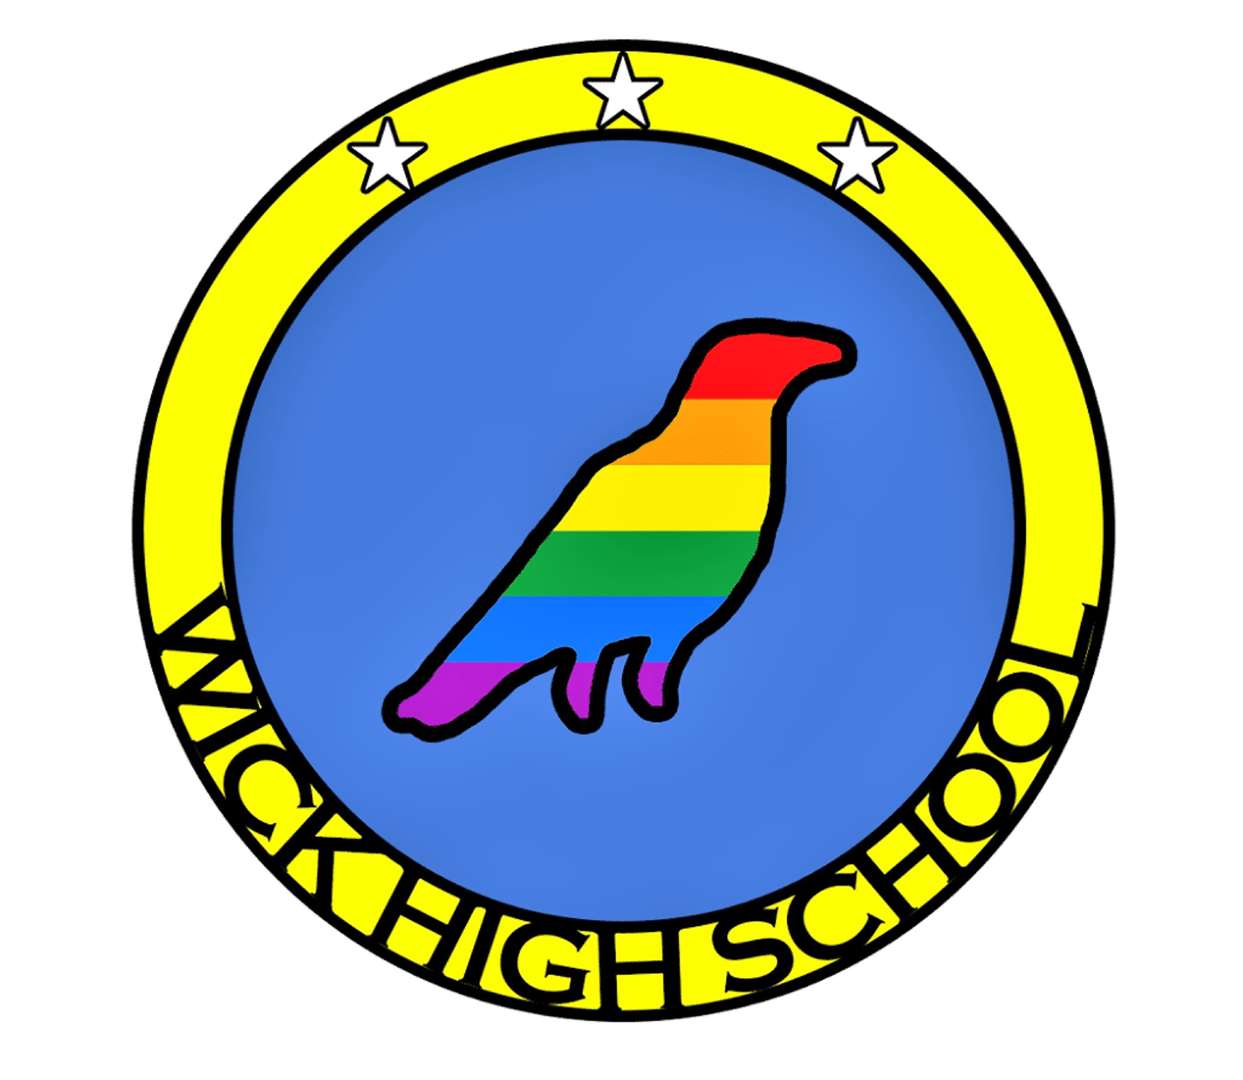 Wick High School's new rainbow logo designed by Scott Sinclair, S6.